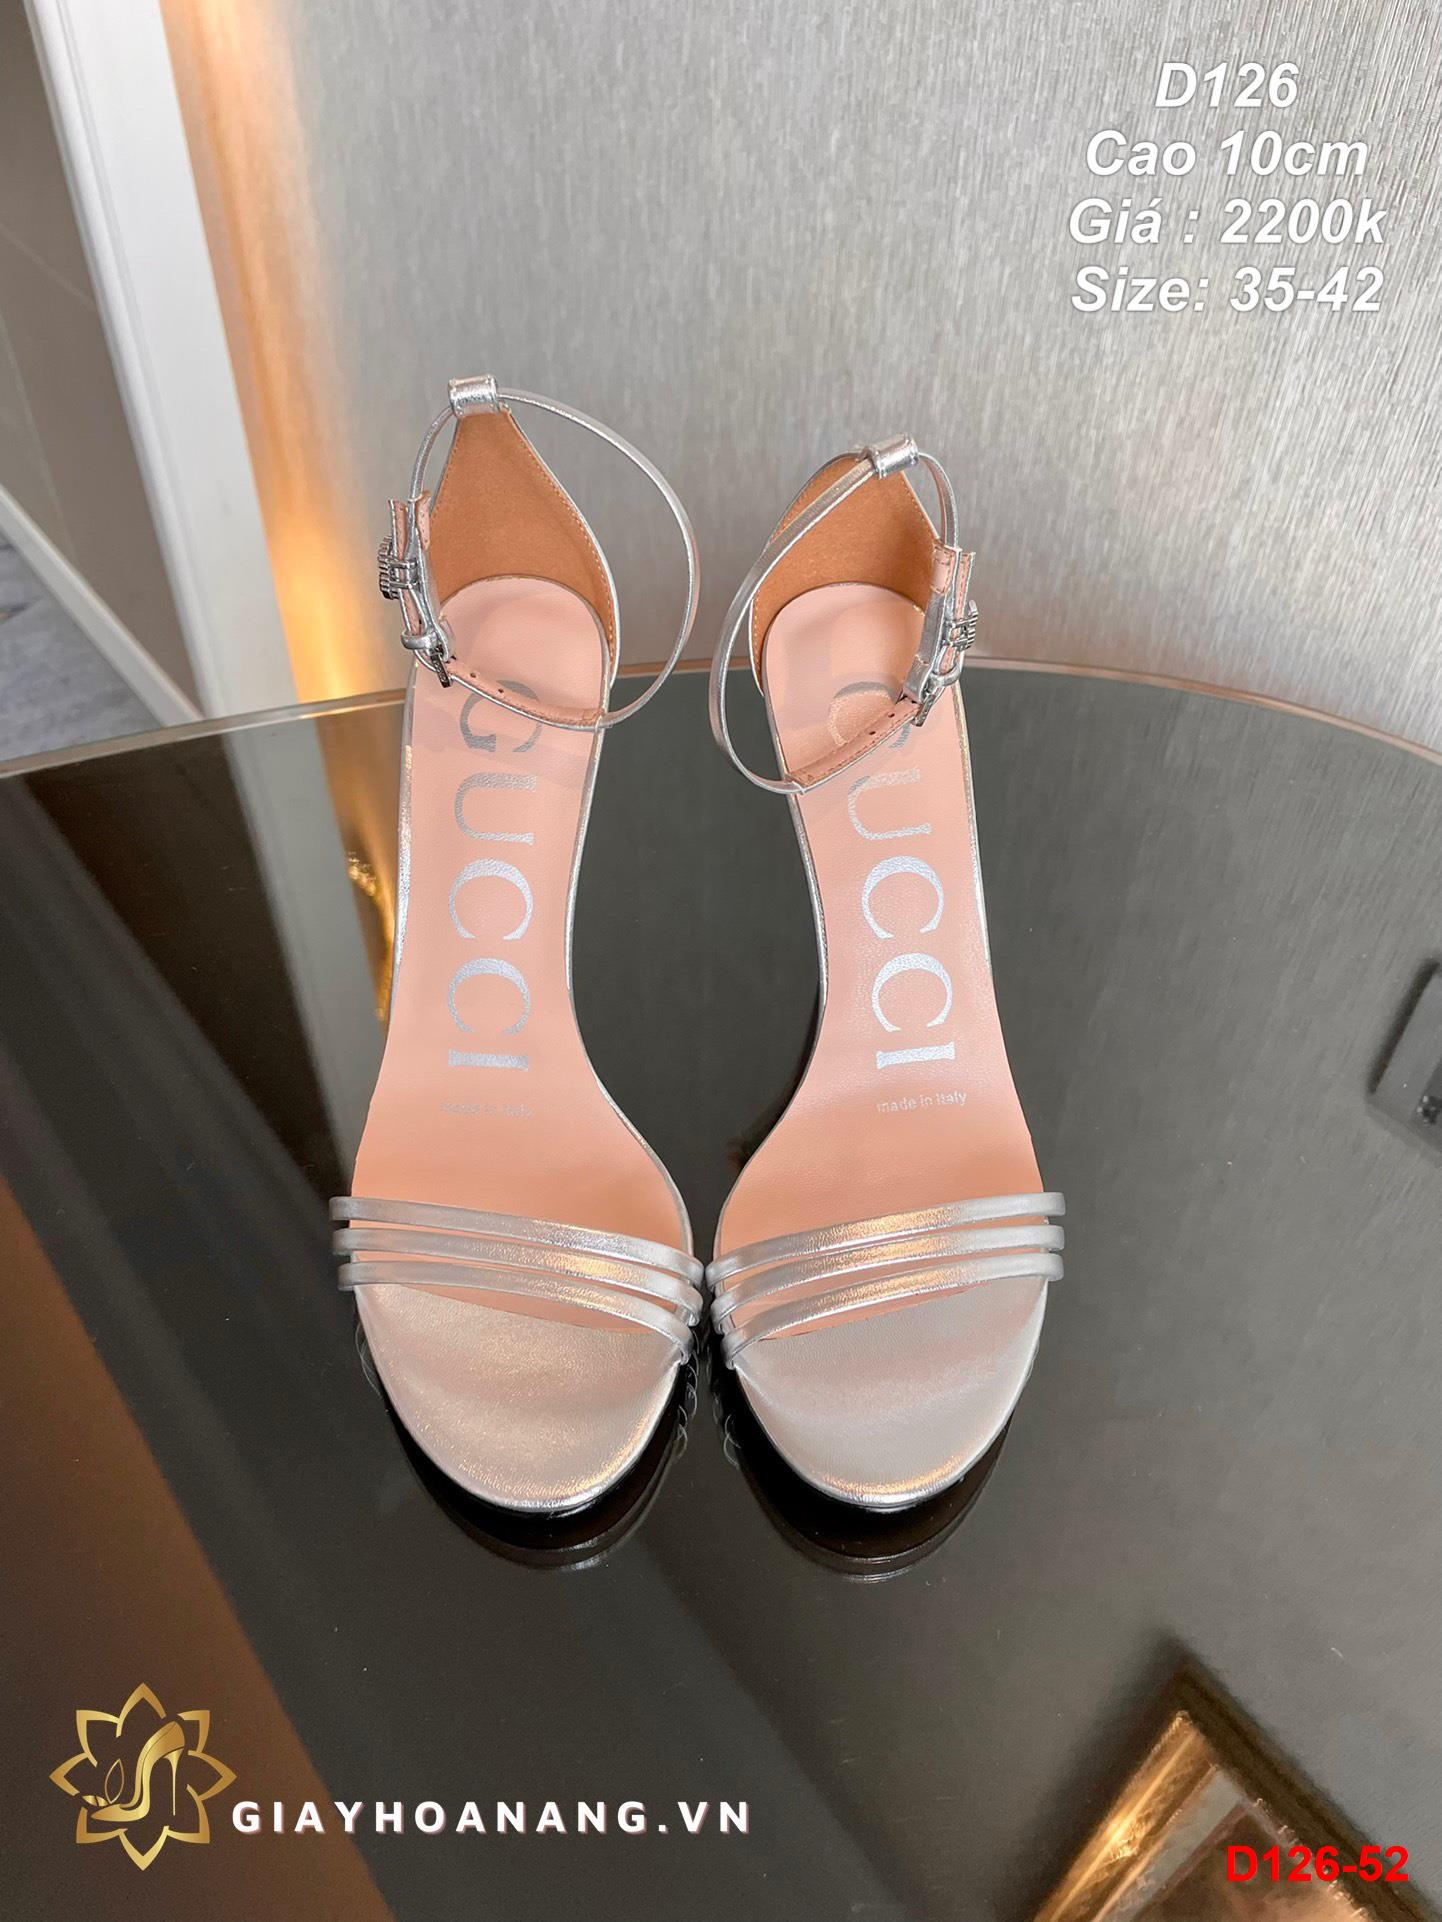 D126-52 Gucci sandal cao 10cm siêu cấp